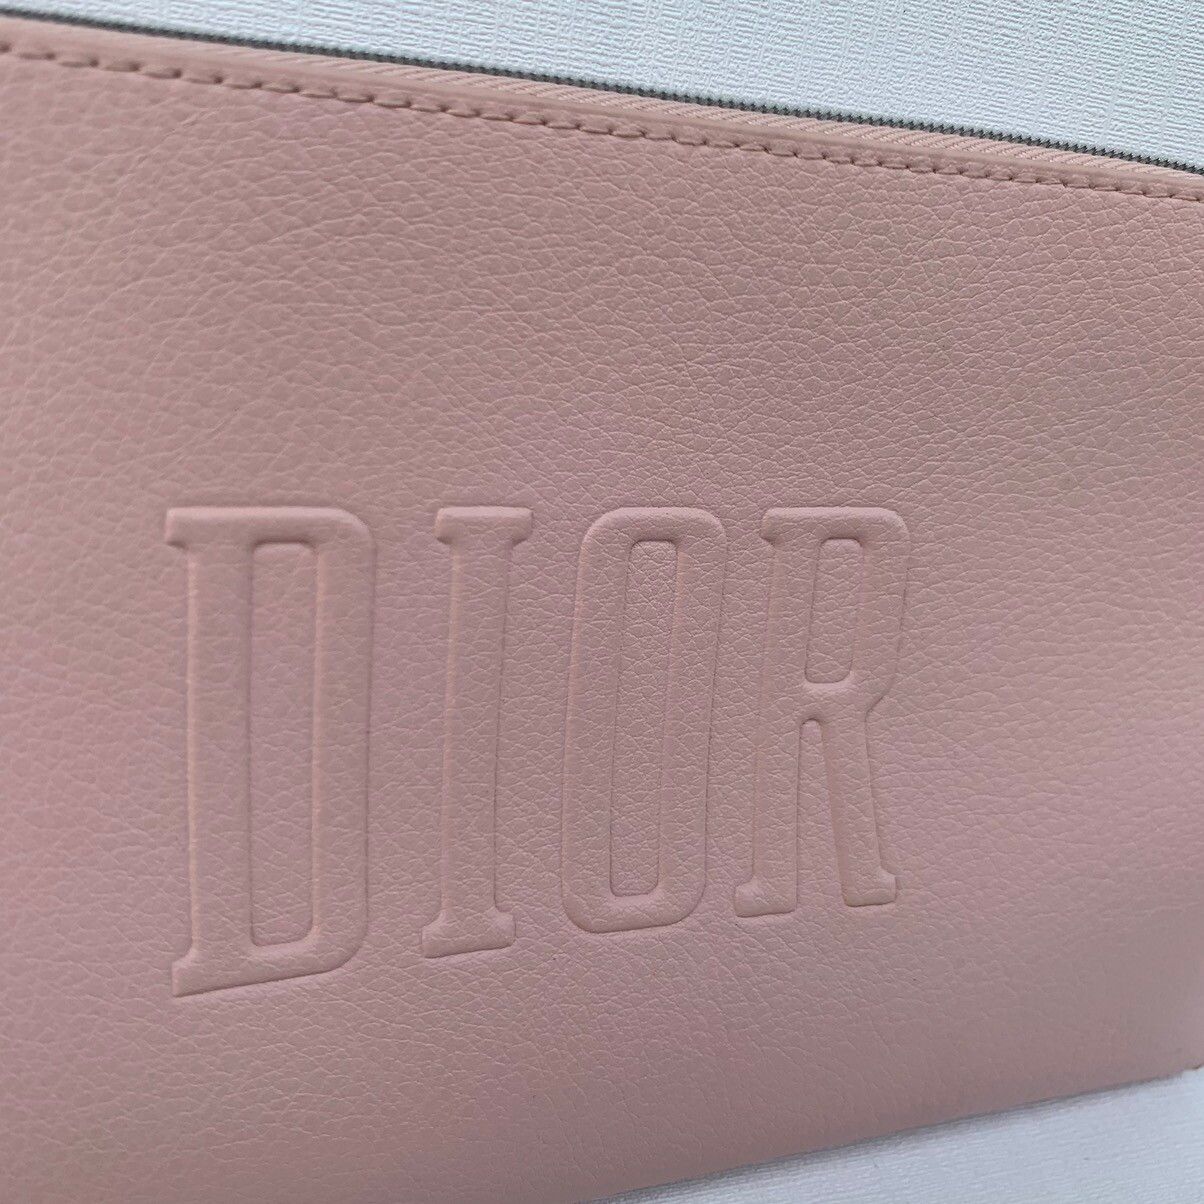 Dior Pouch Bag Zipper Cluth vegan leather - 3